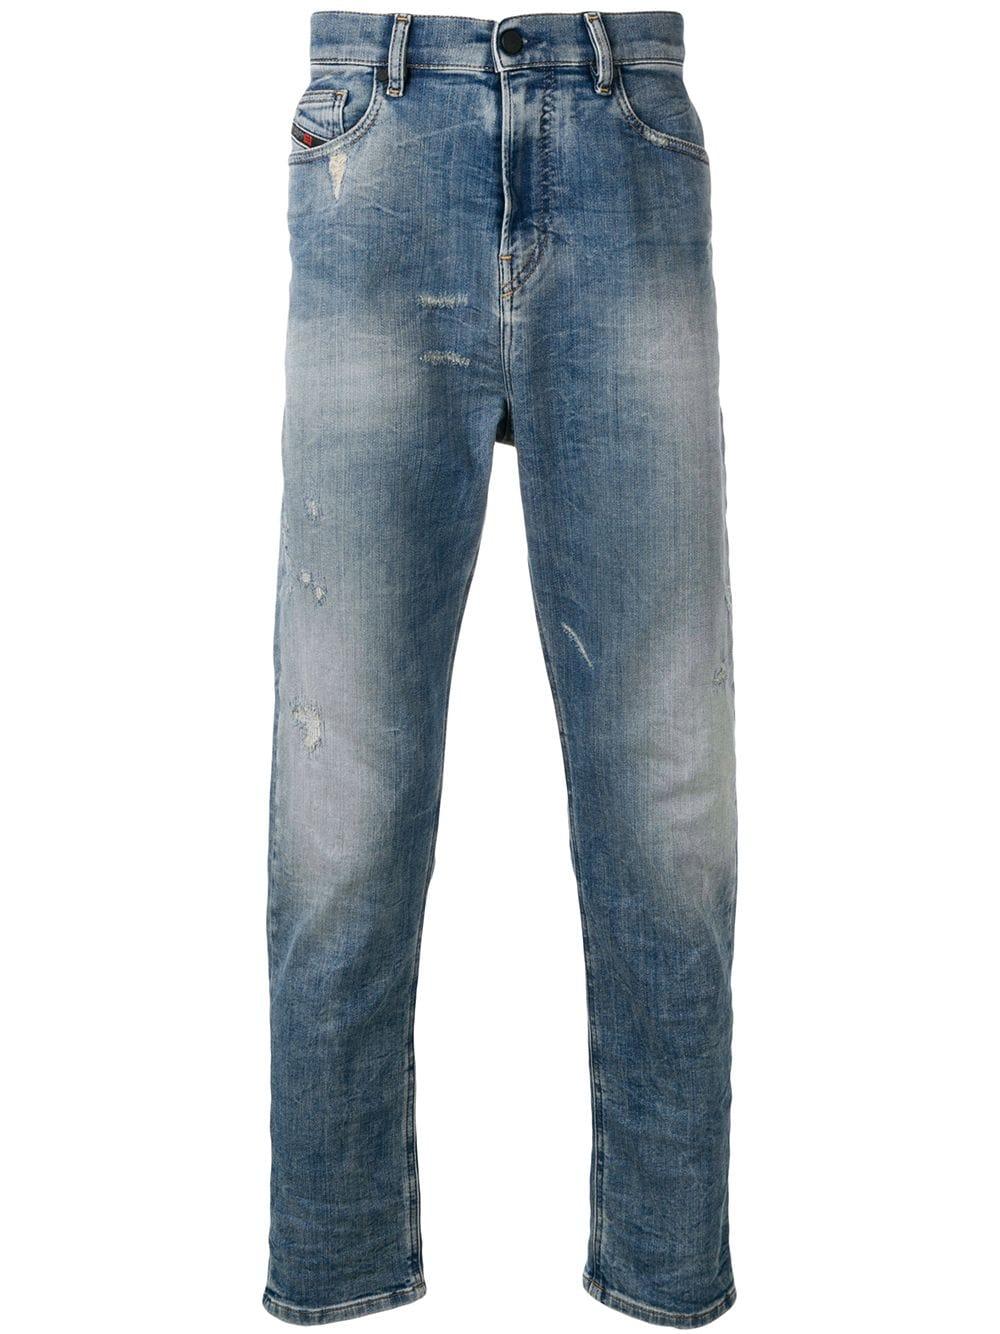 DIESEL Denim D-vider Tapered Jeans in Blue for Men - Lyst